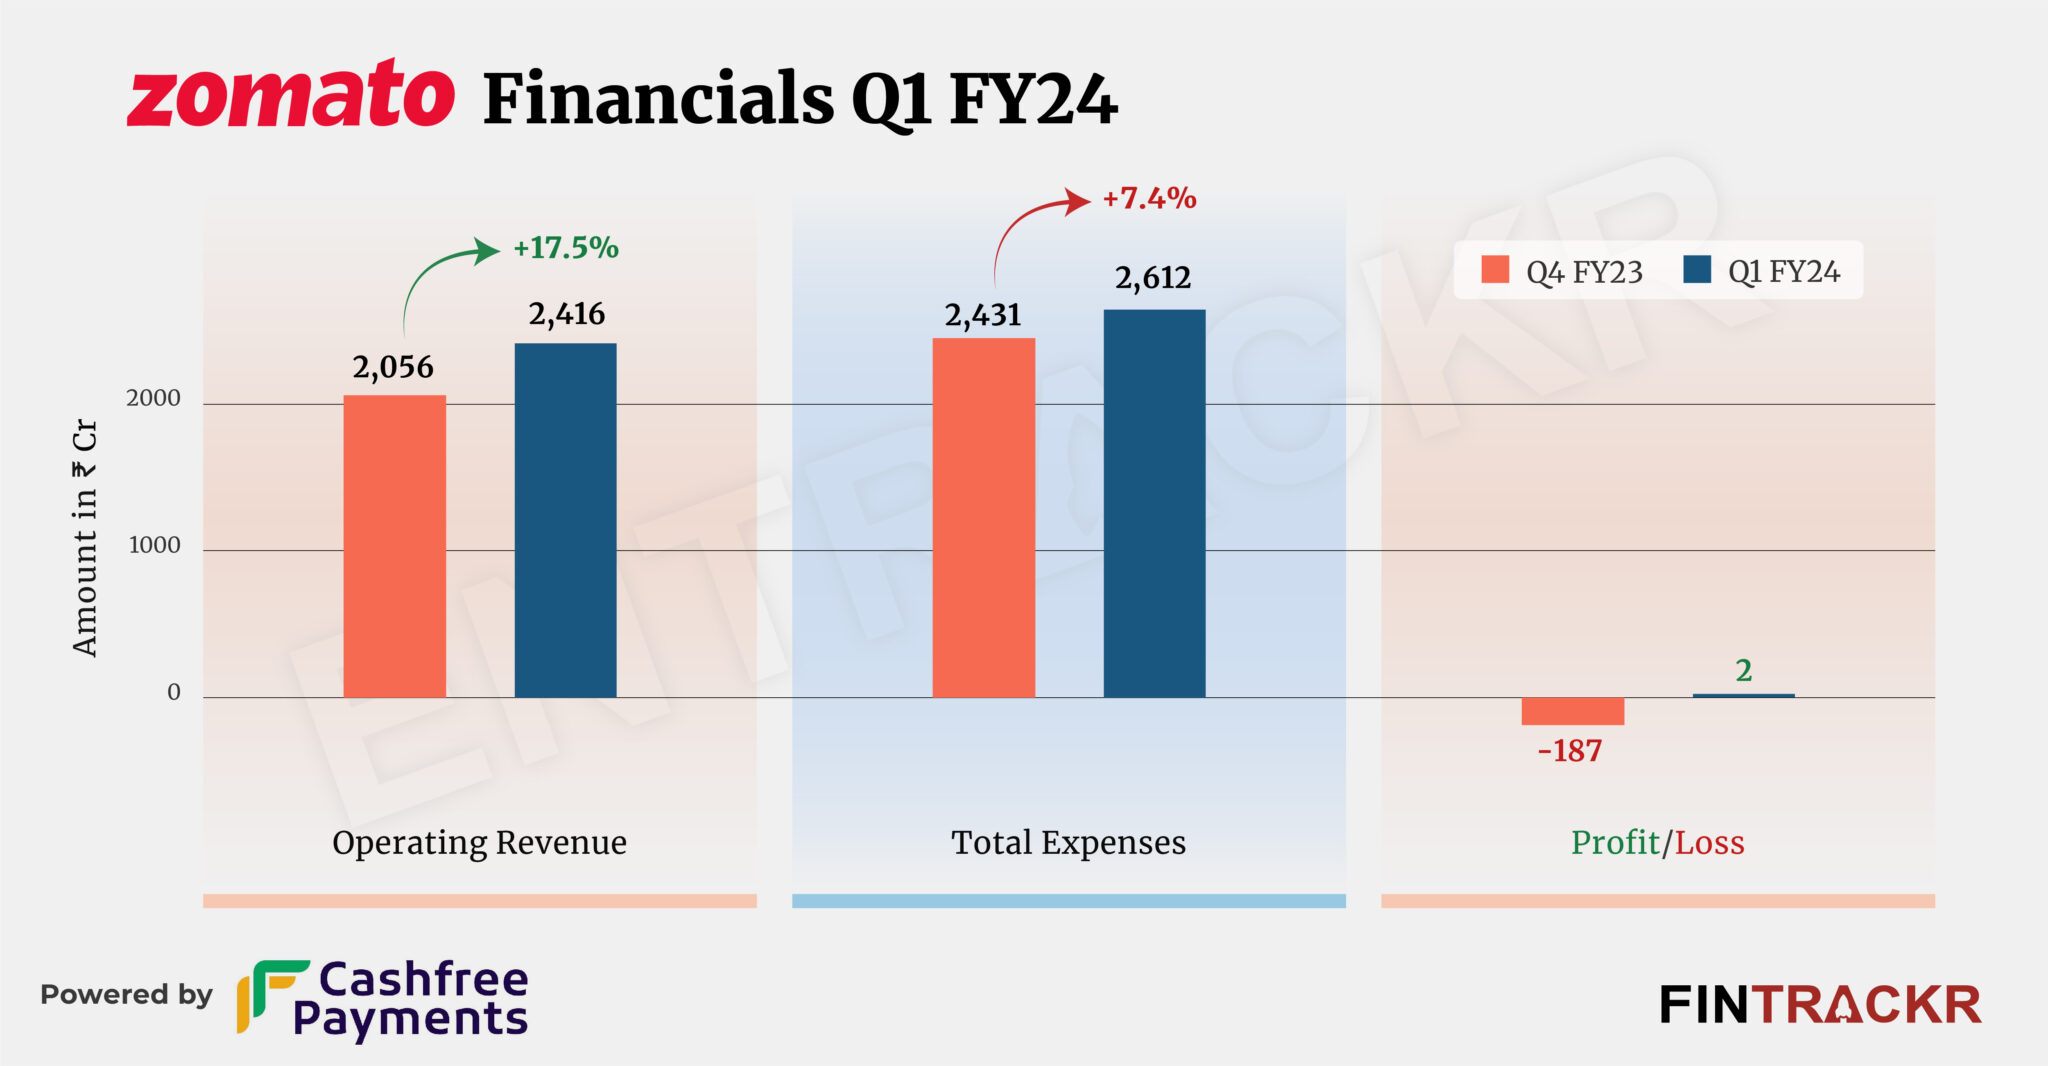 Zomato posts Rs 2,416 Cr revenue in Q1 FY24, turns profitable